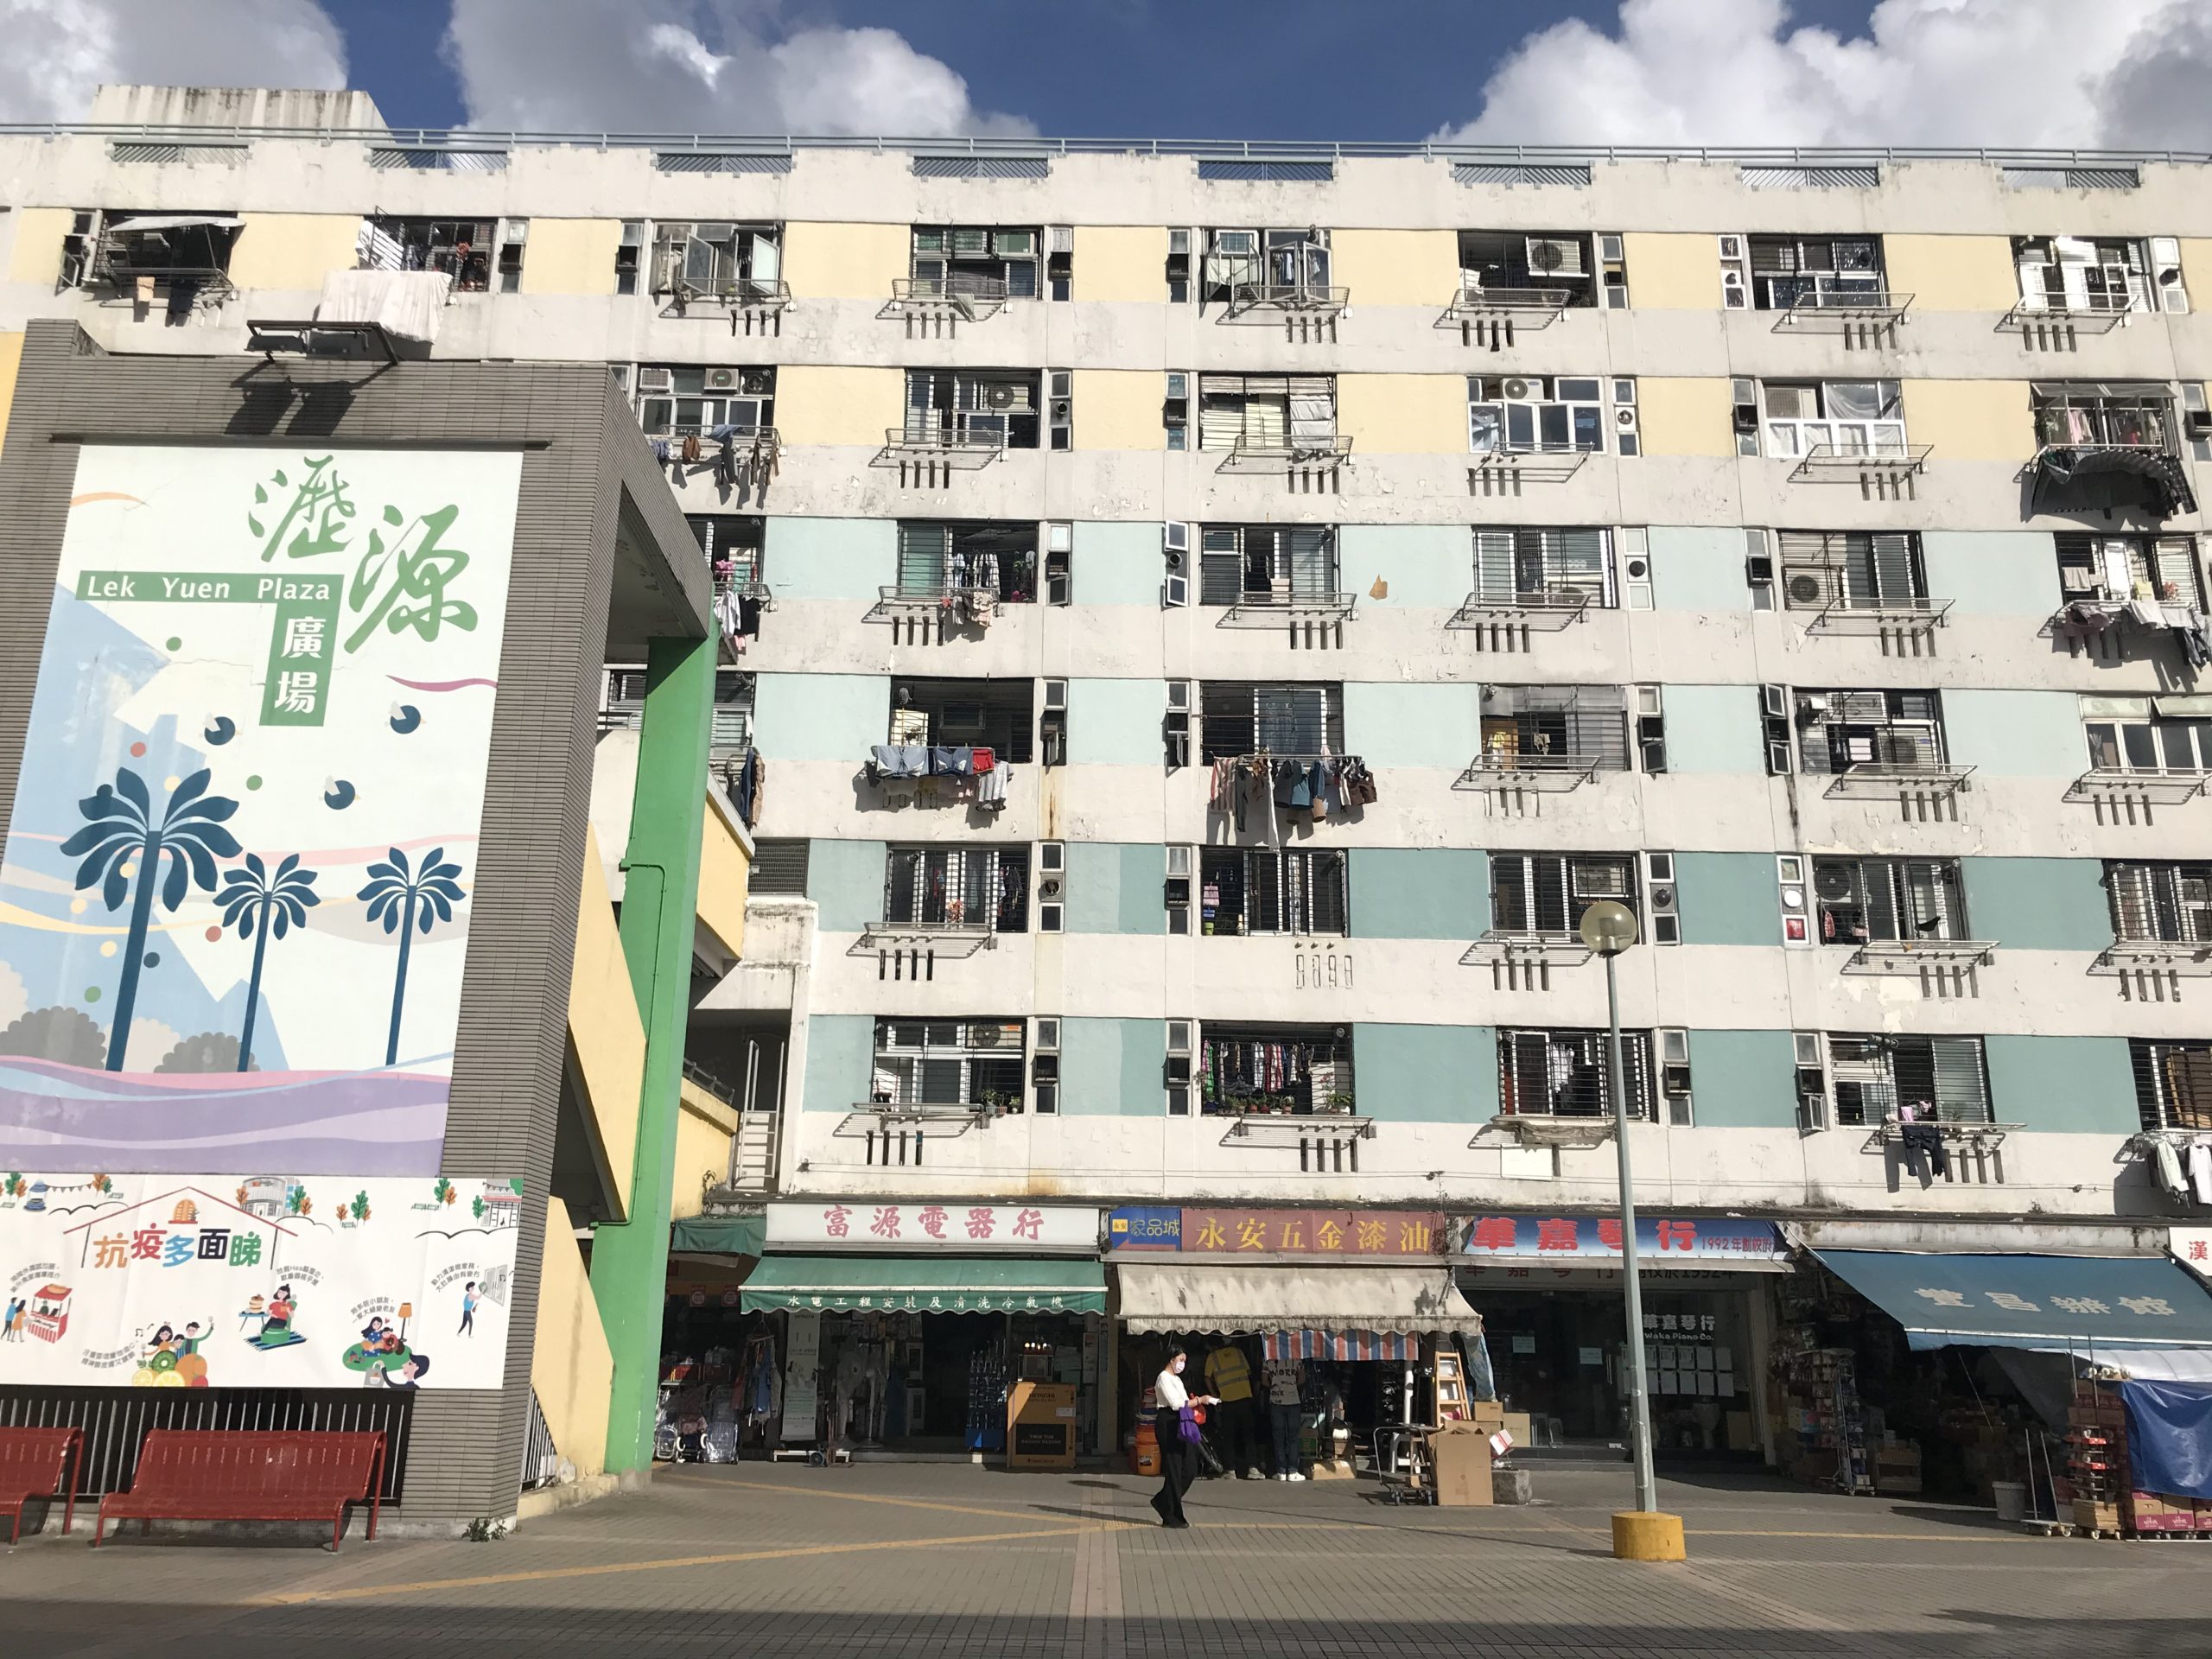 Traditional public housing community in Lek Yuen Estate